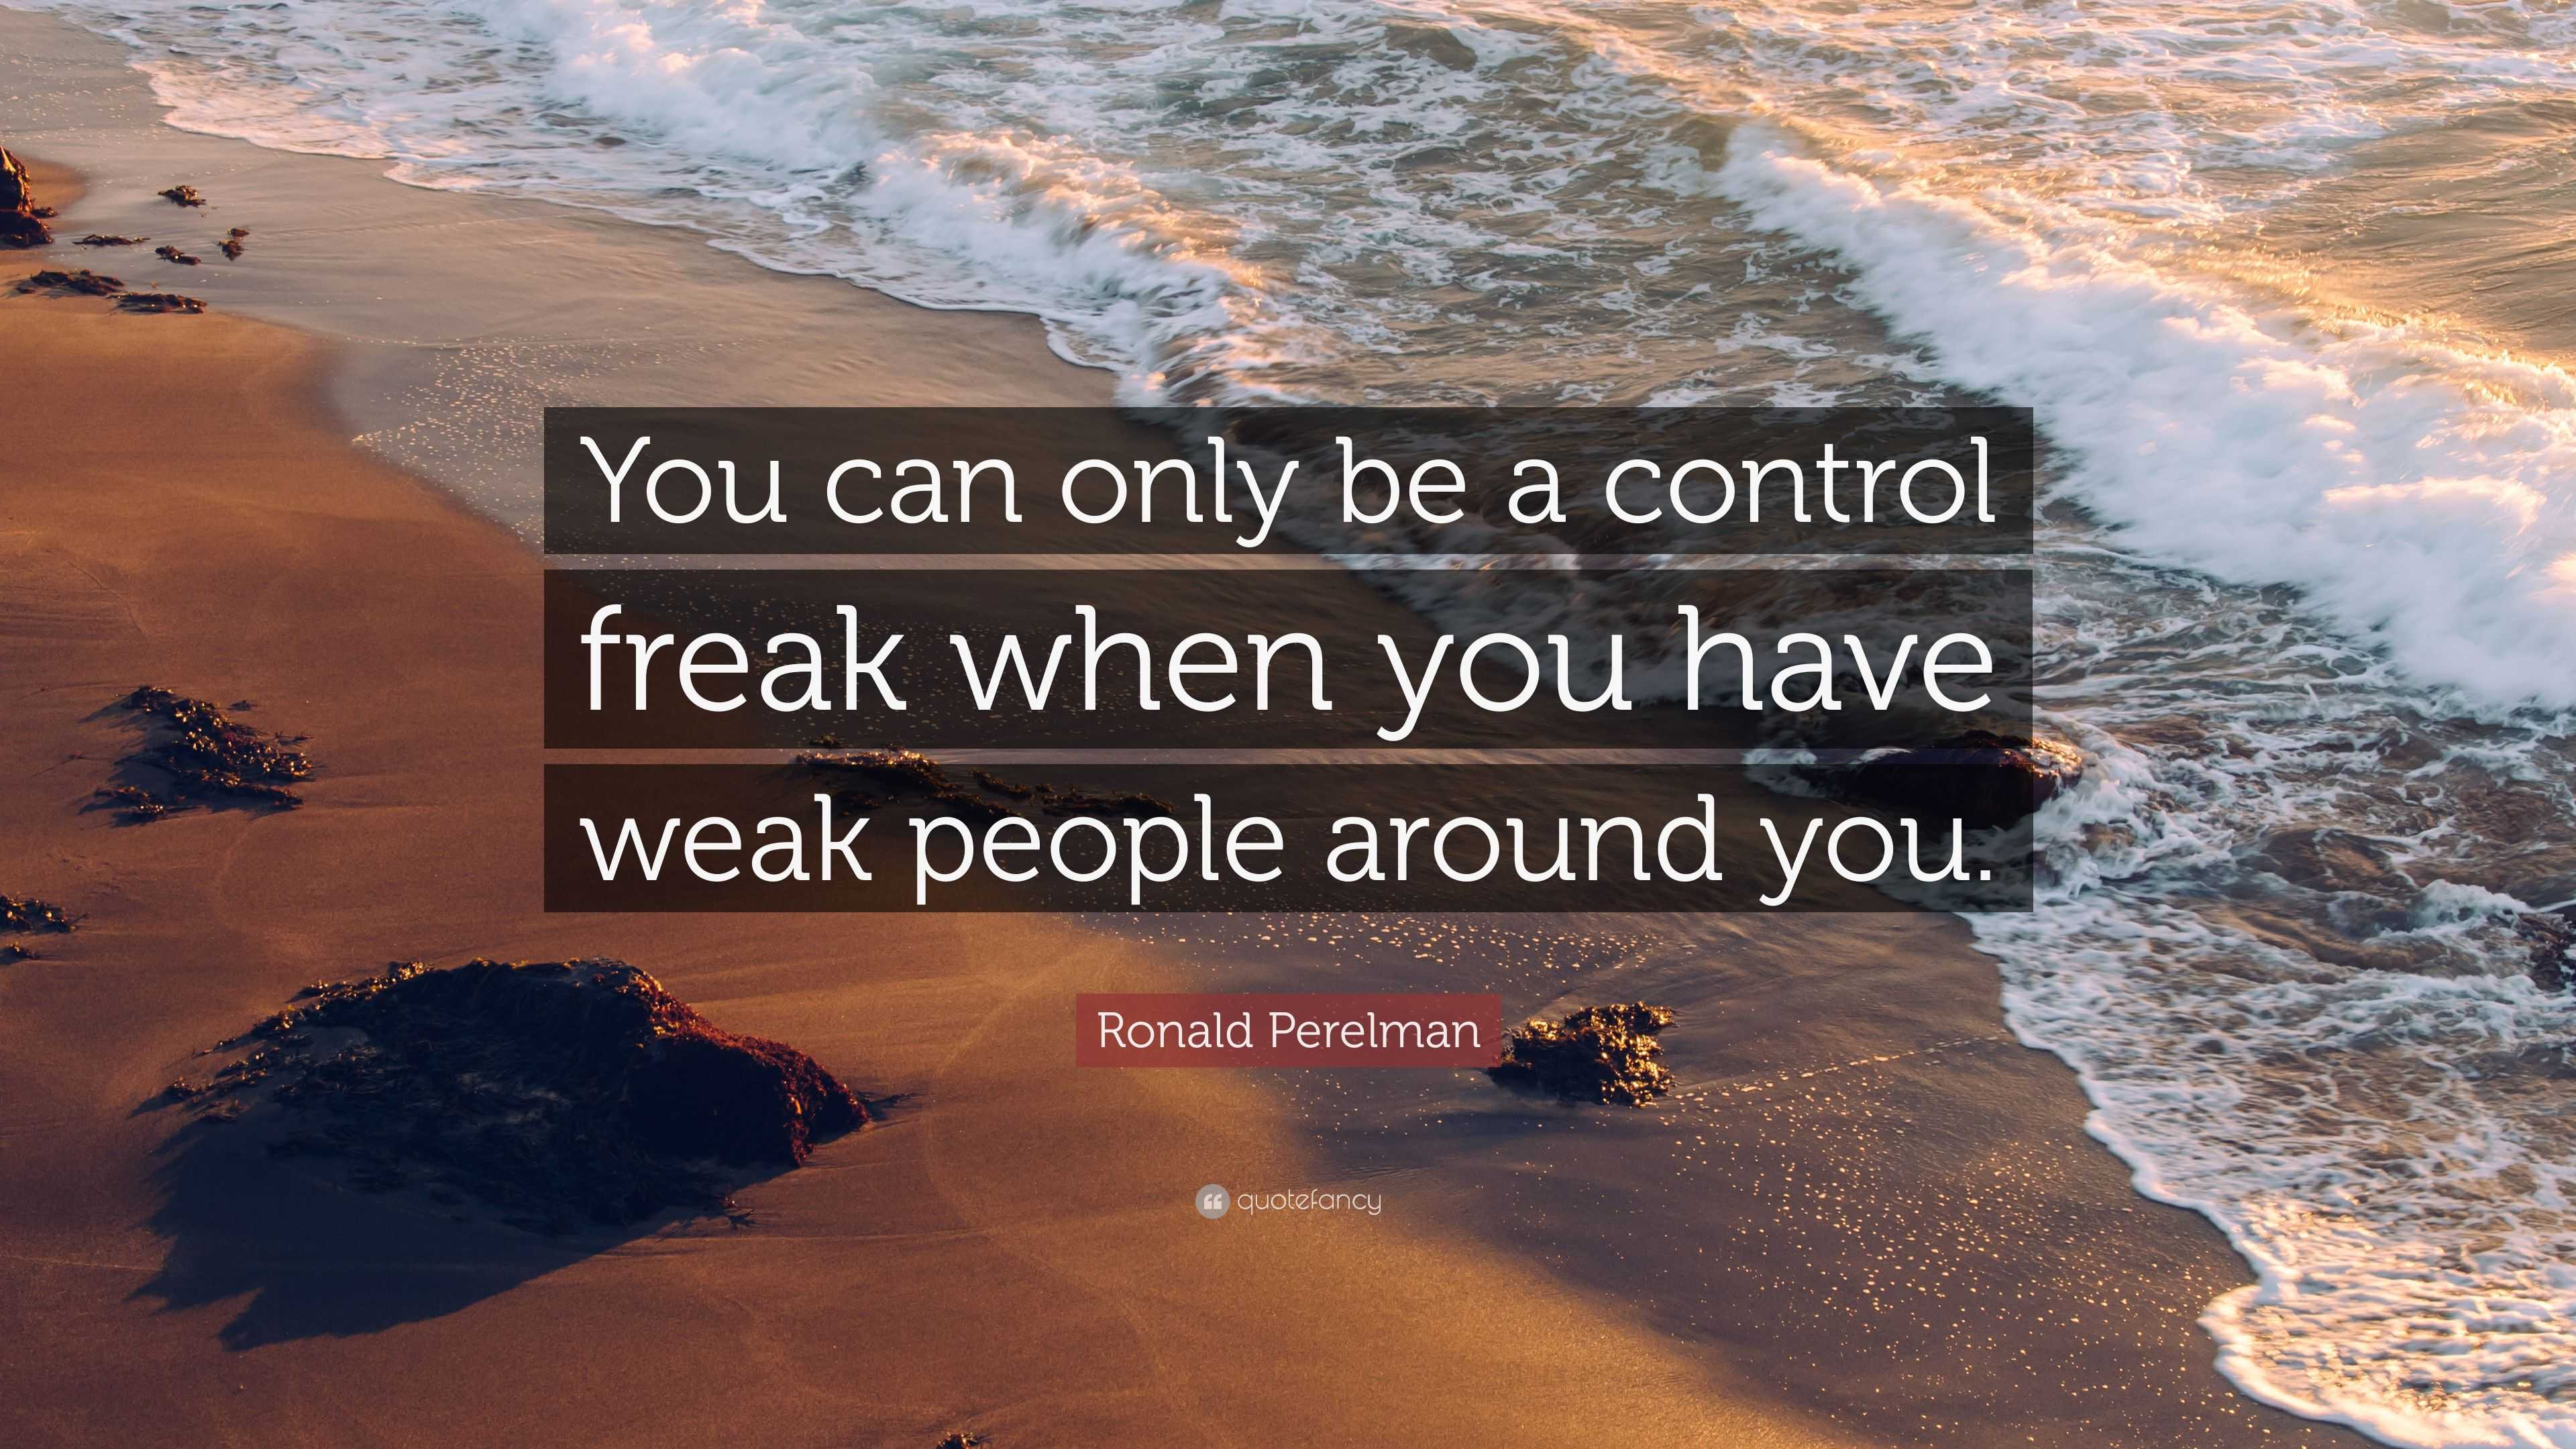 Be a Control Freak